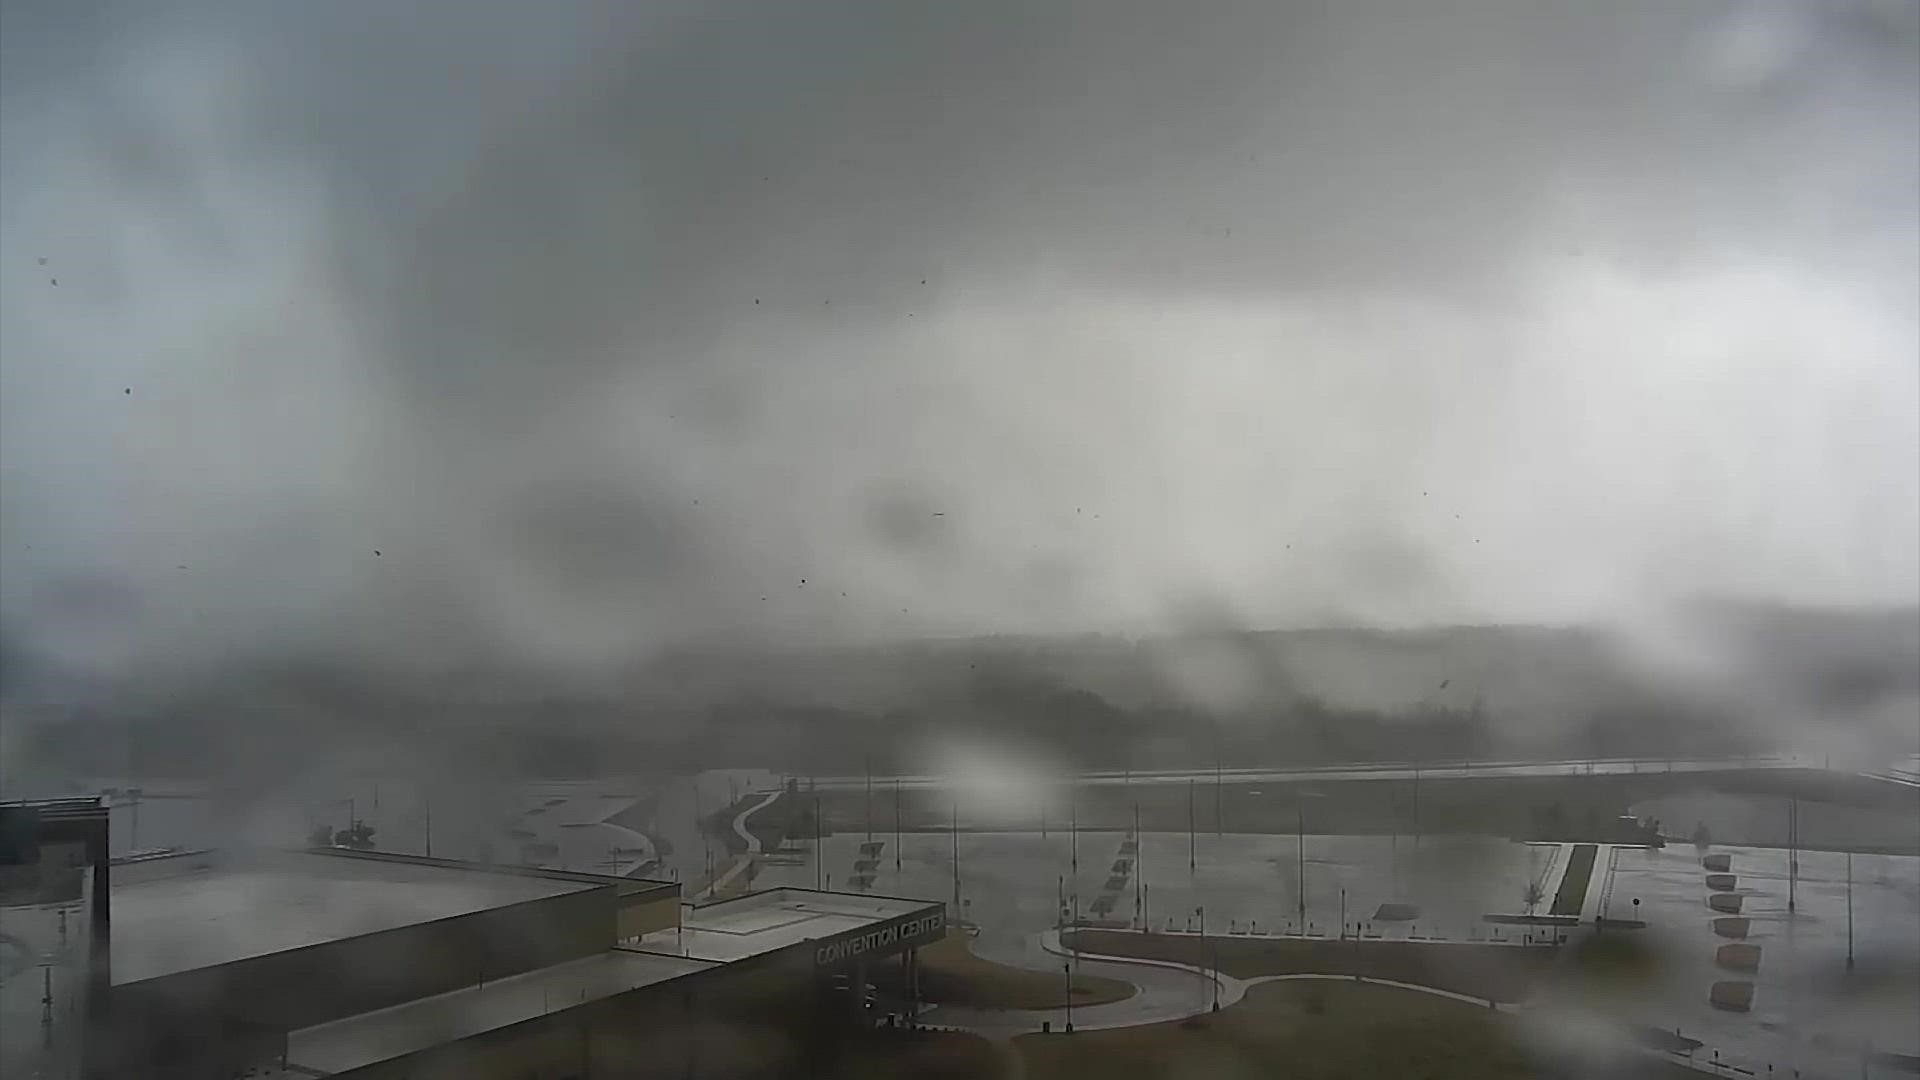 Large tornado caught on camera at Kalahari resort in Round Rock, Texas